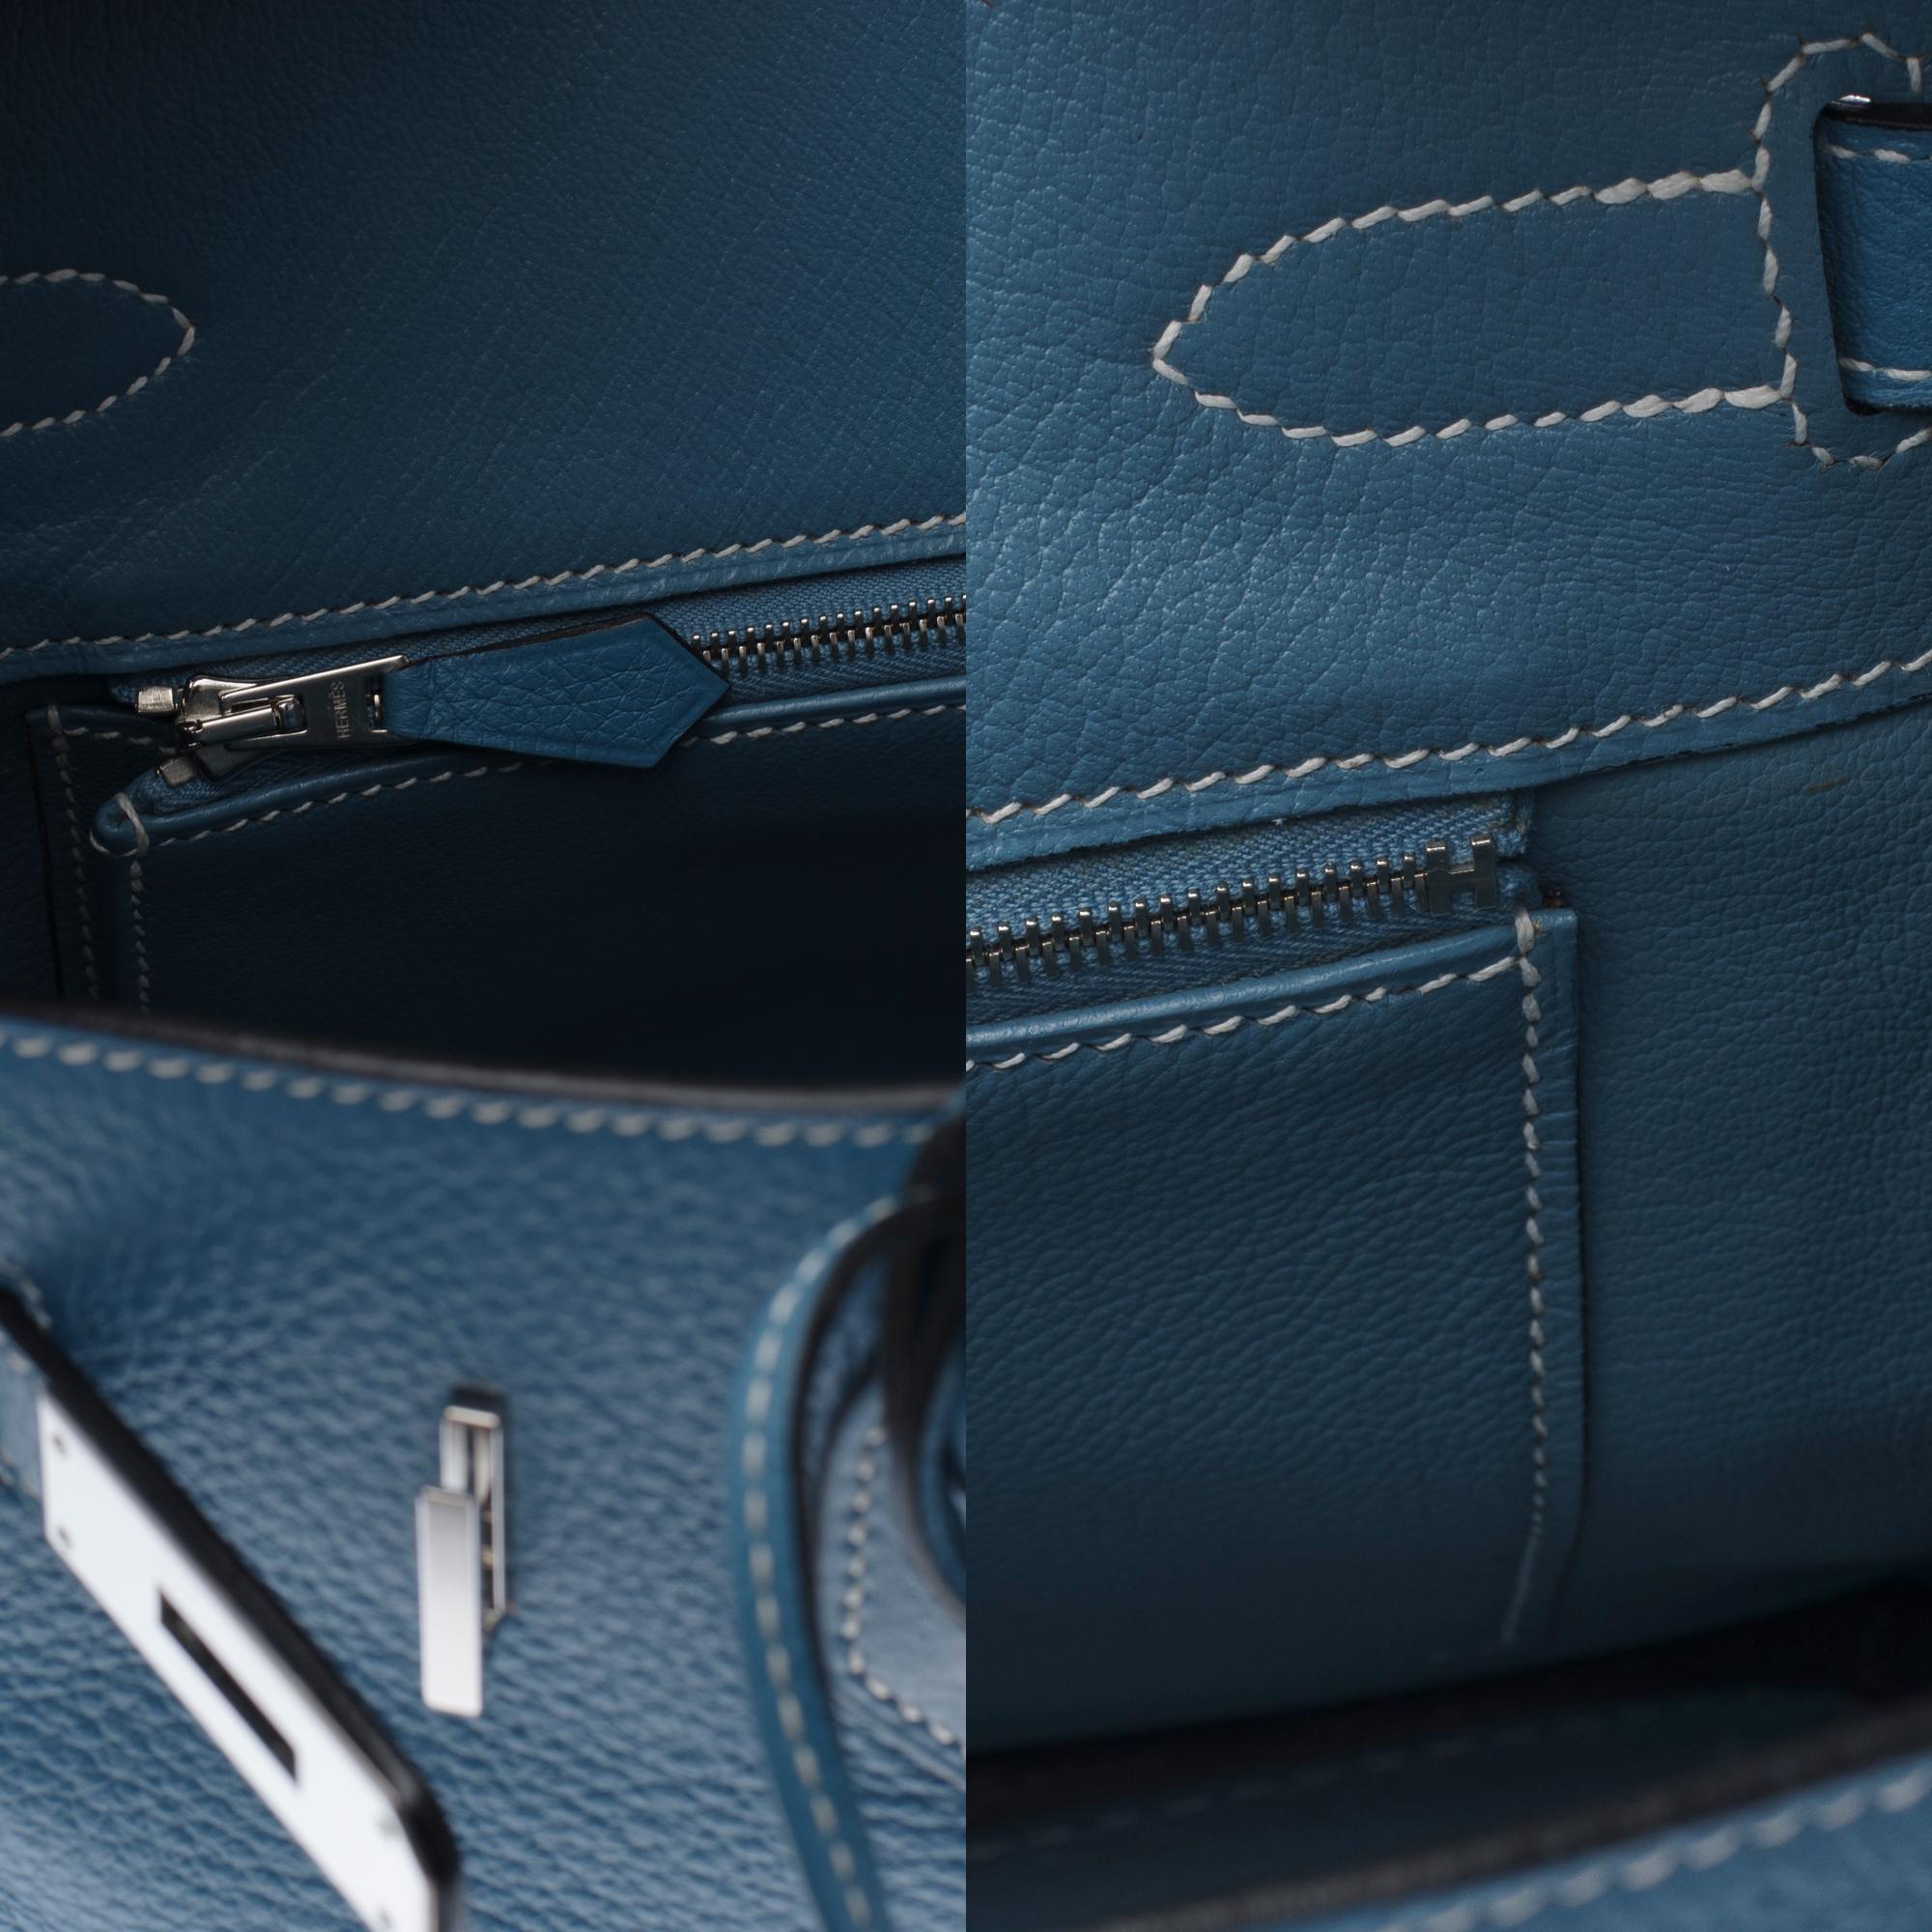 Hermès Birkin 30 handbag in Togo blue jean leather, PHW 2